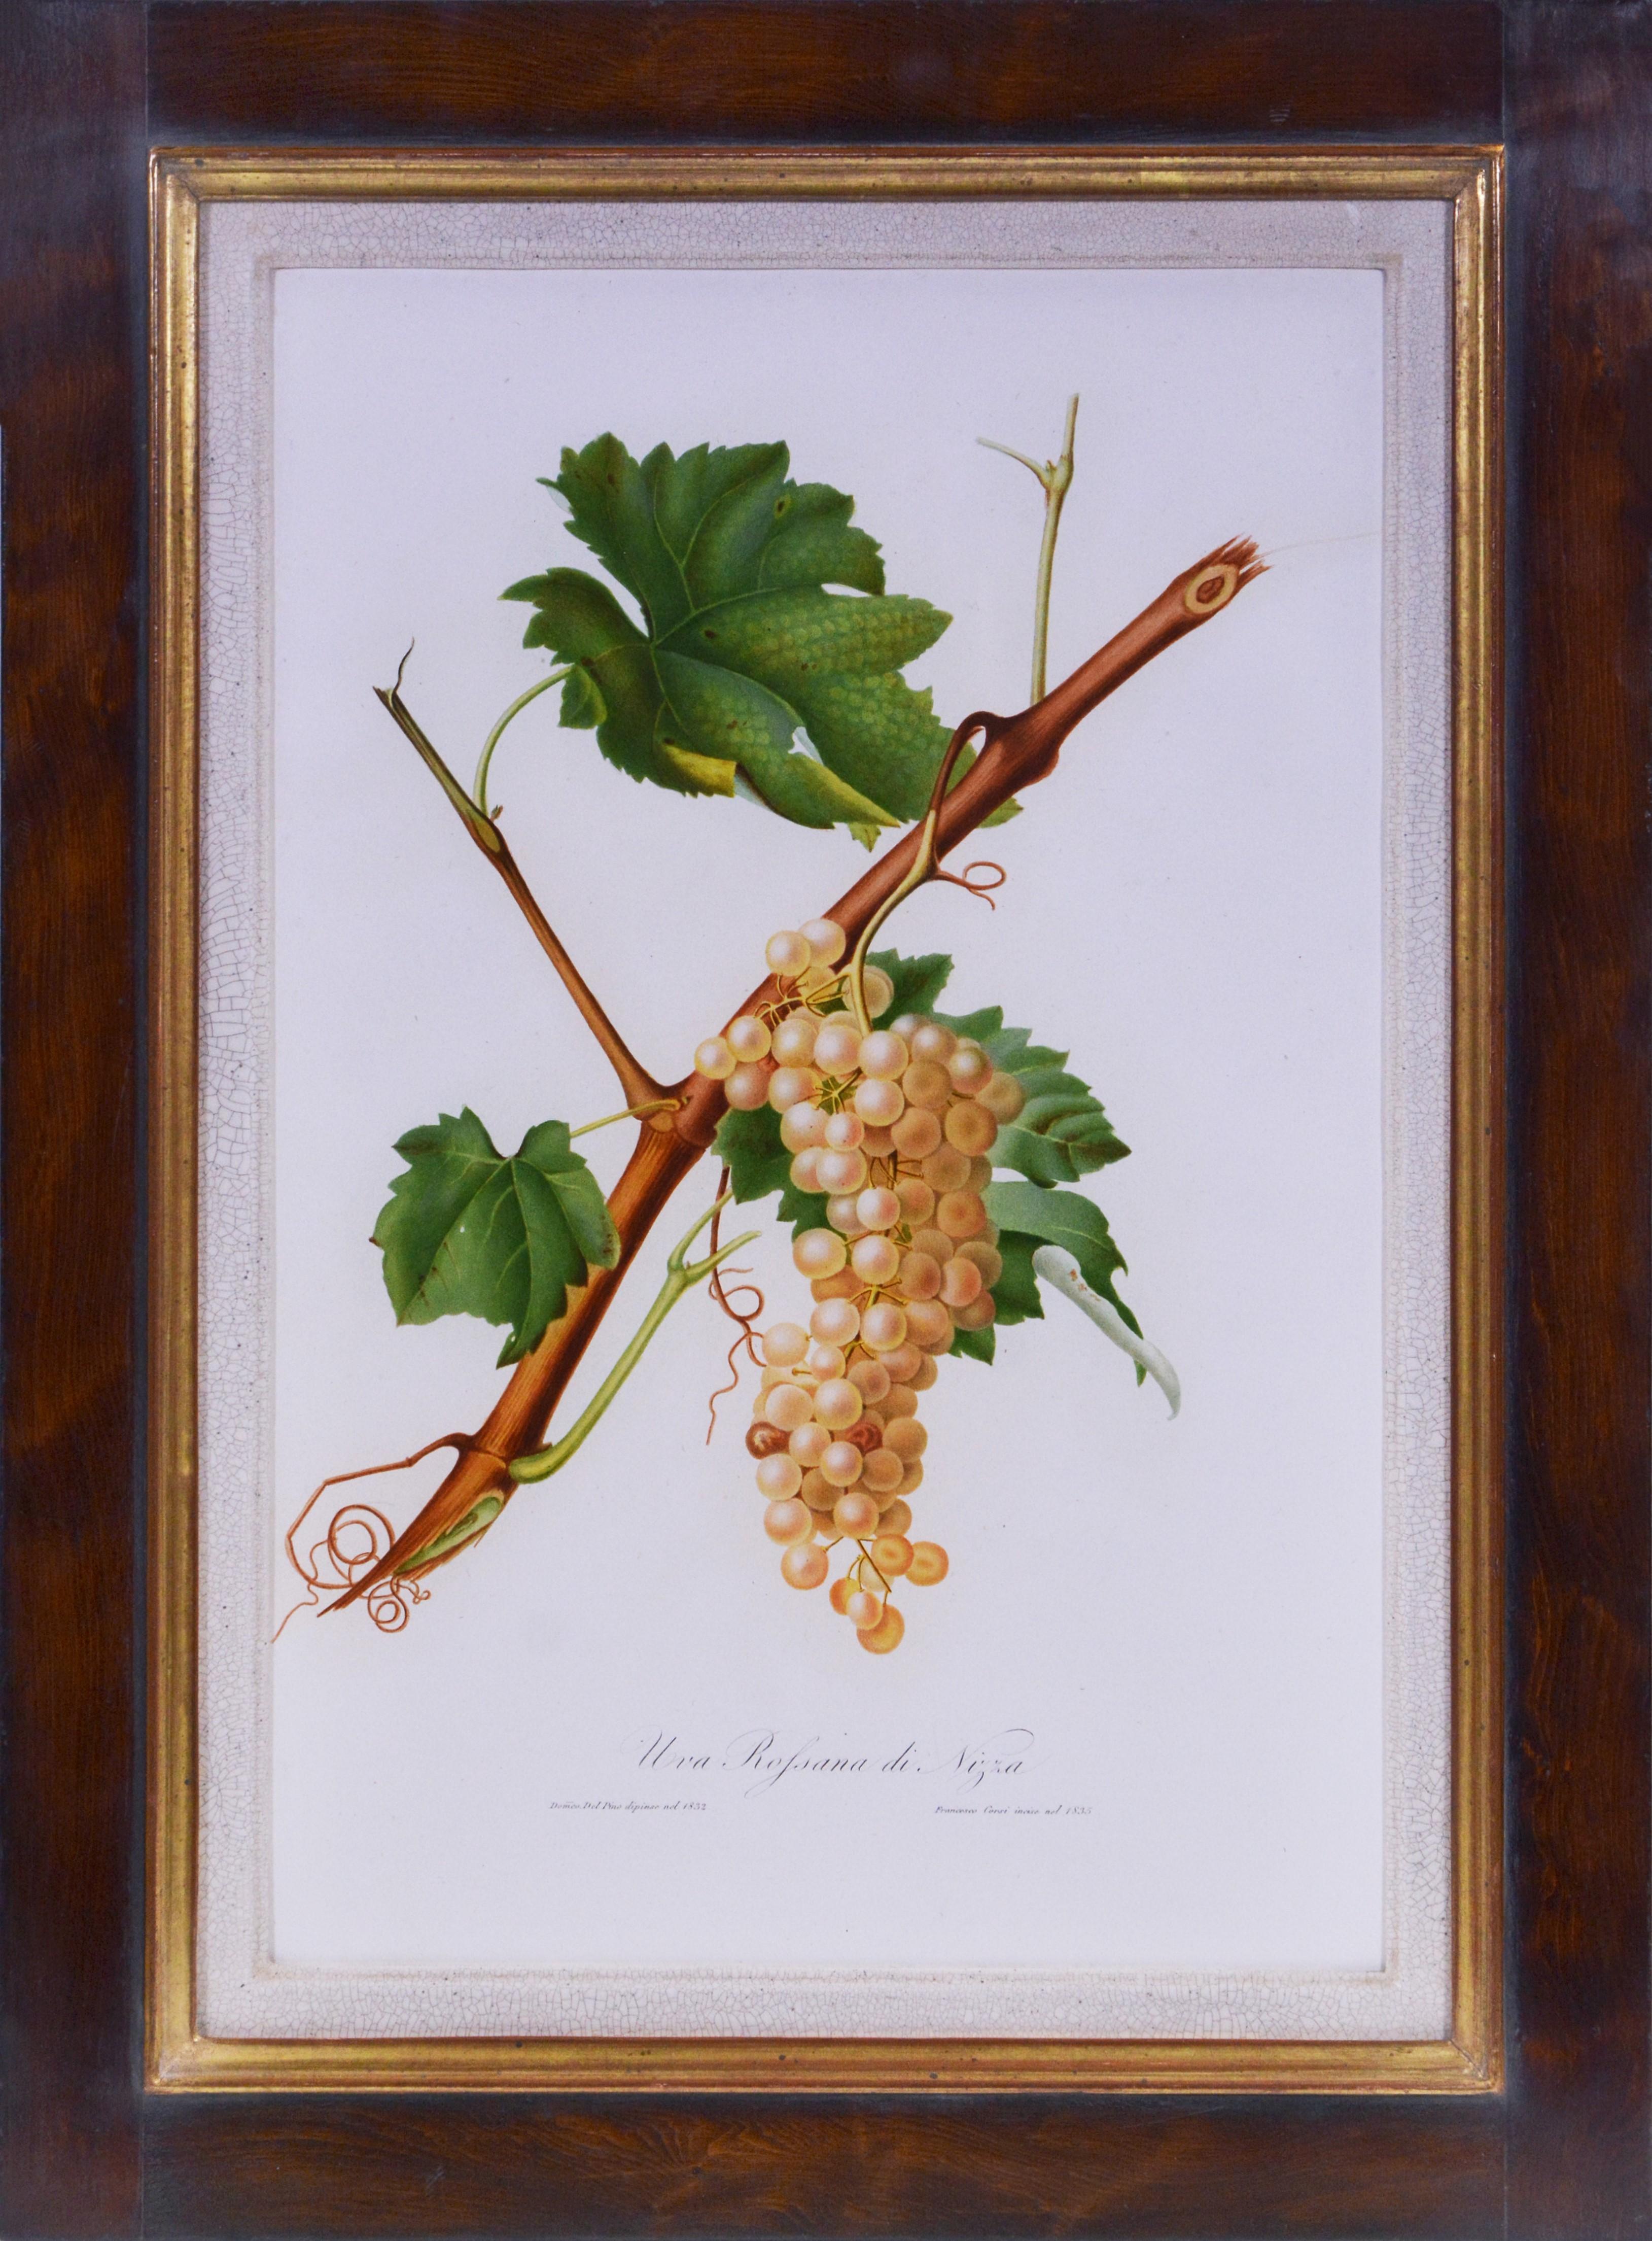 GALLESIO. A Group of Six Grapes.  - Print by Giorgio Gallesio